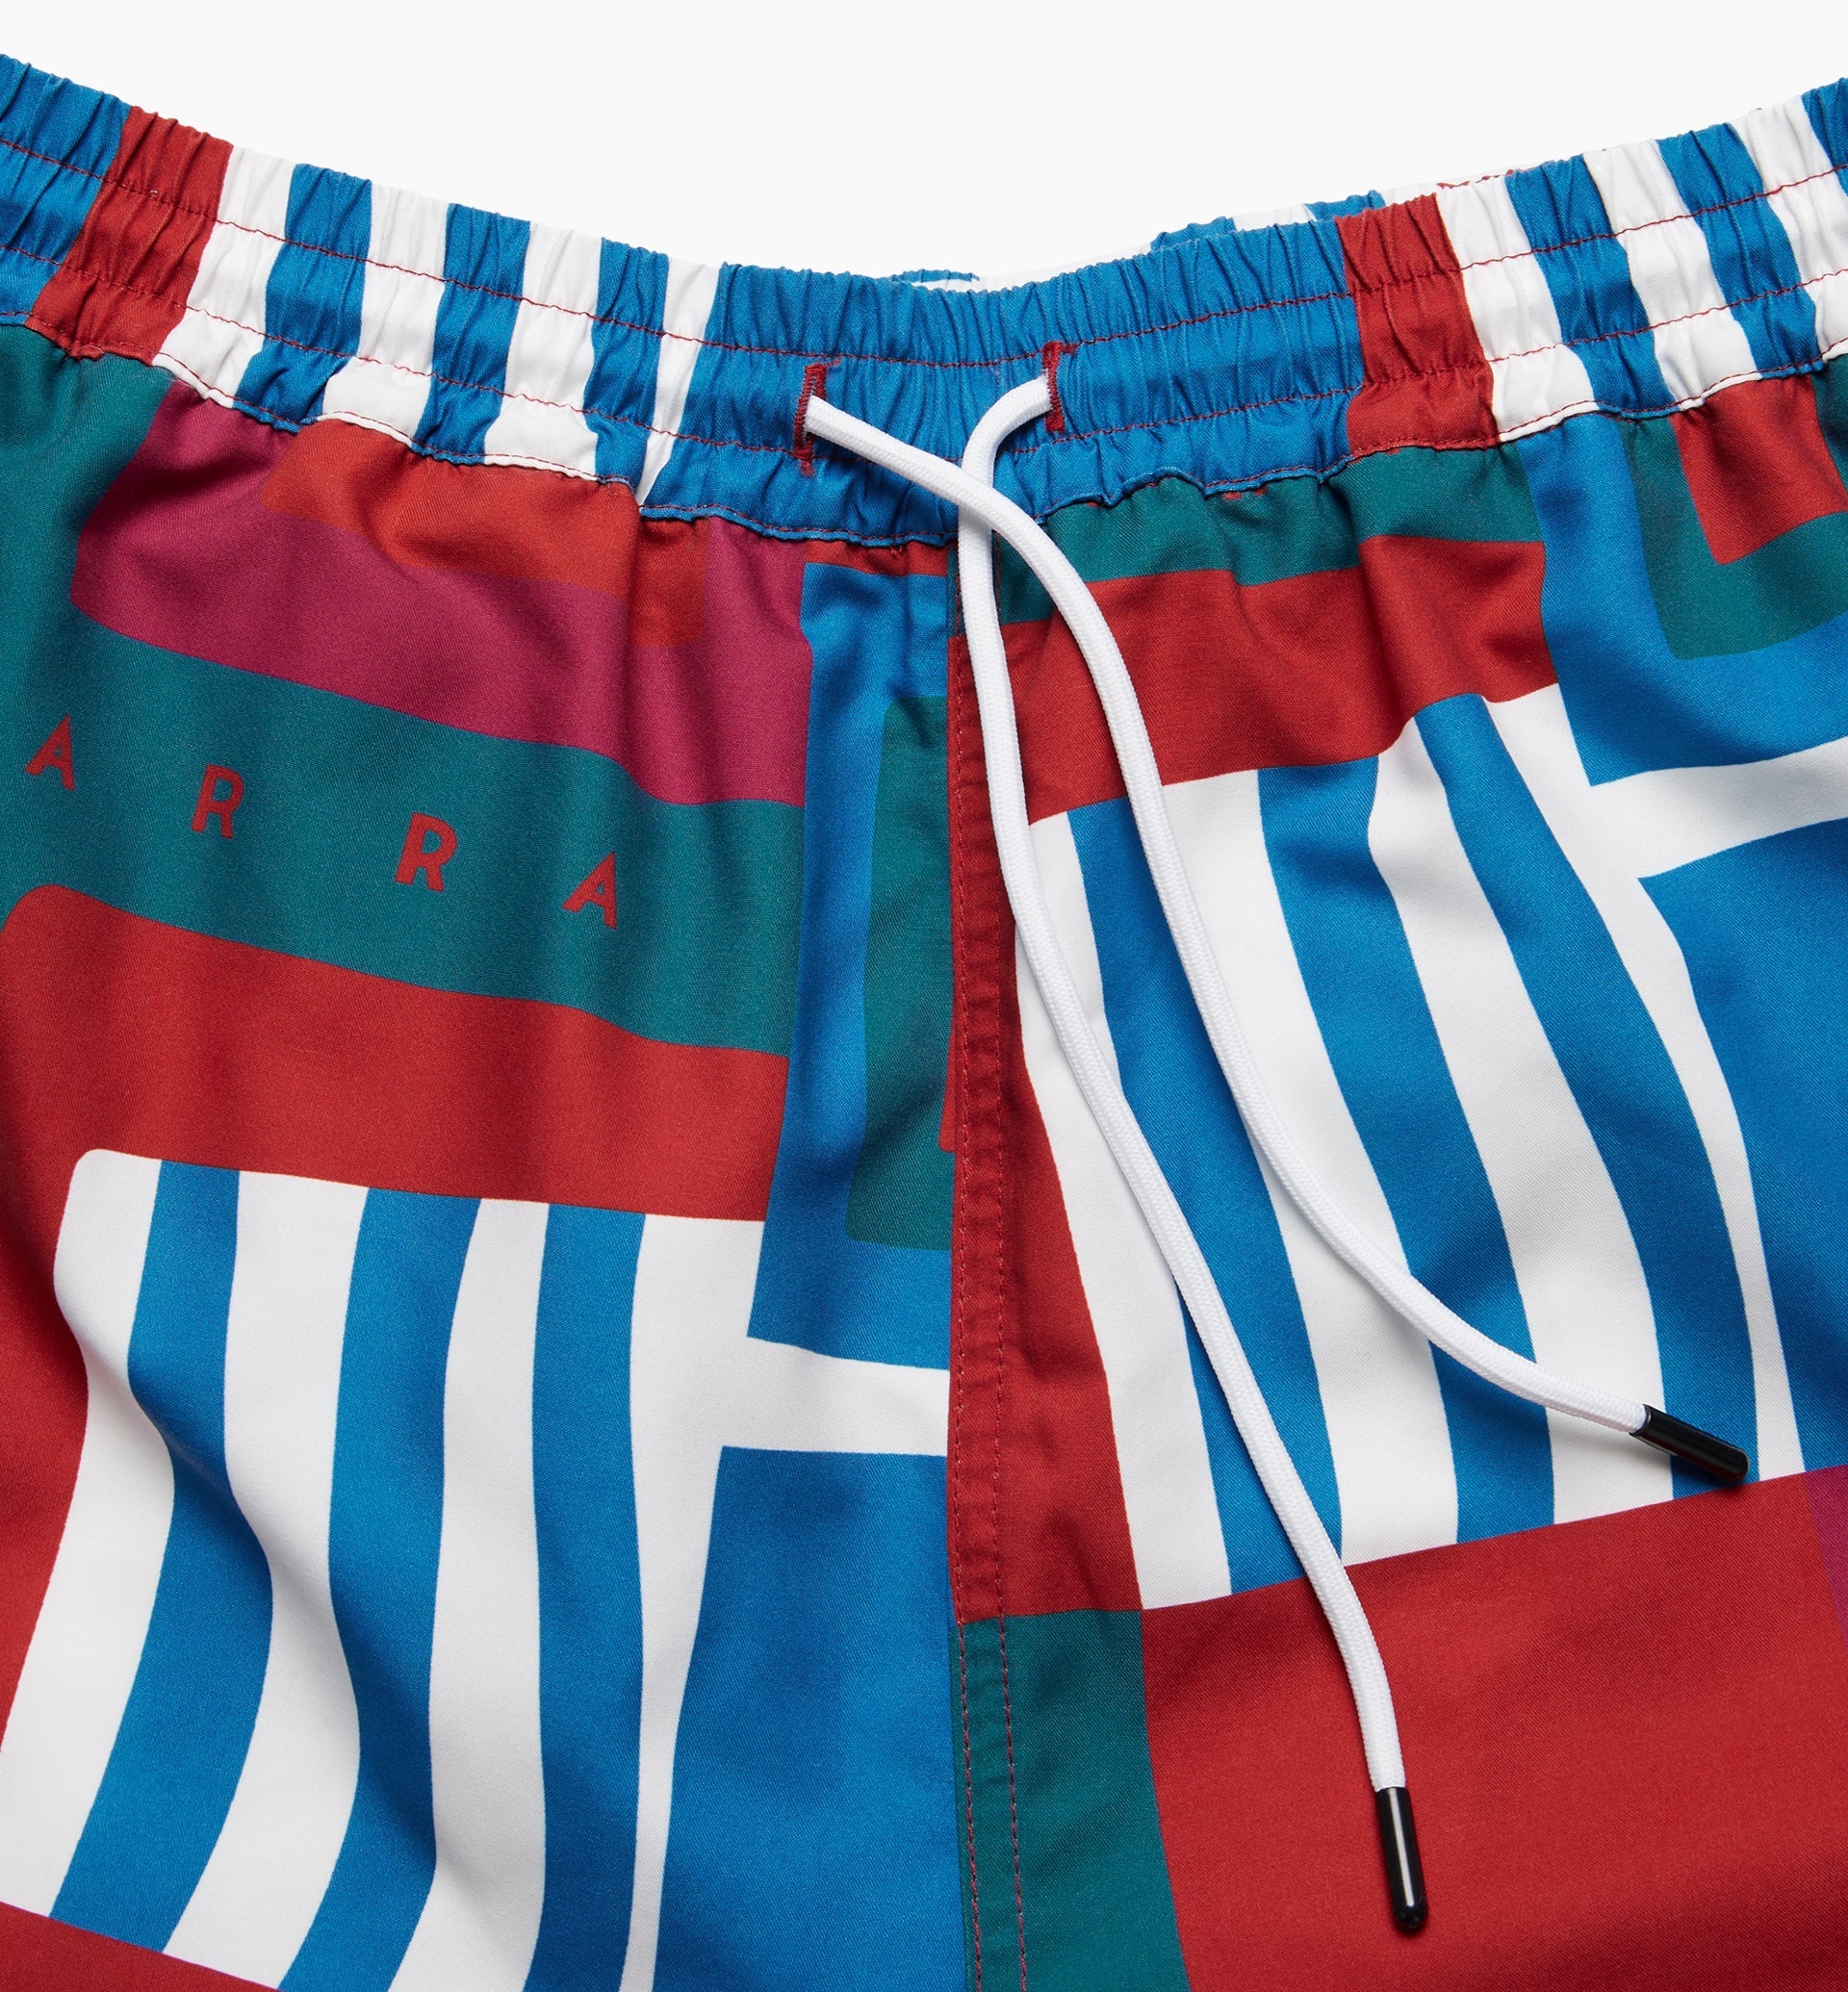 Parra - hot springs pattern swim shorts